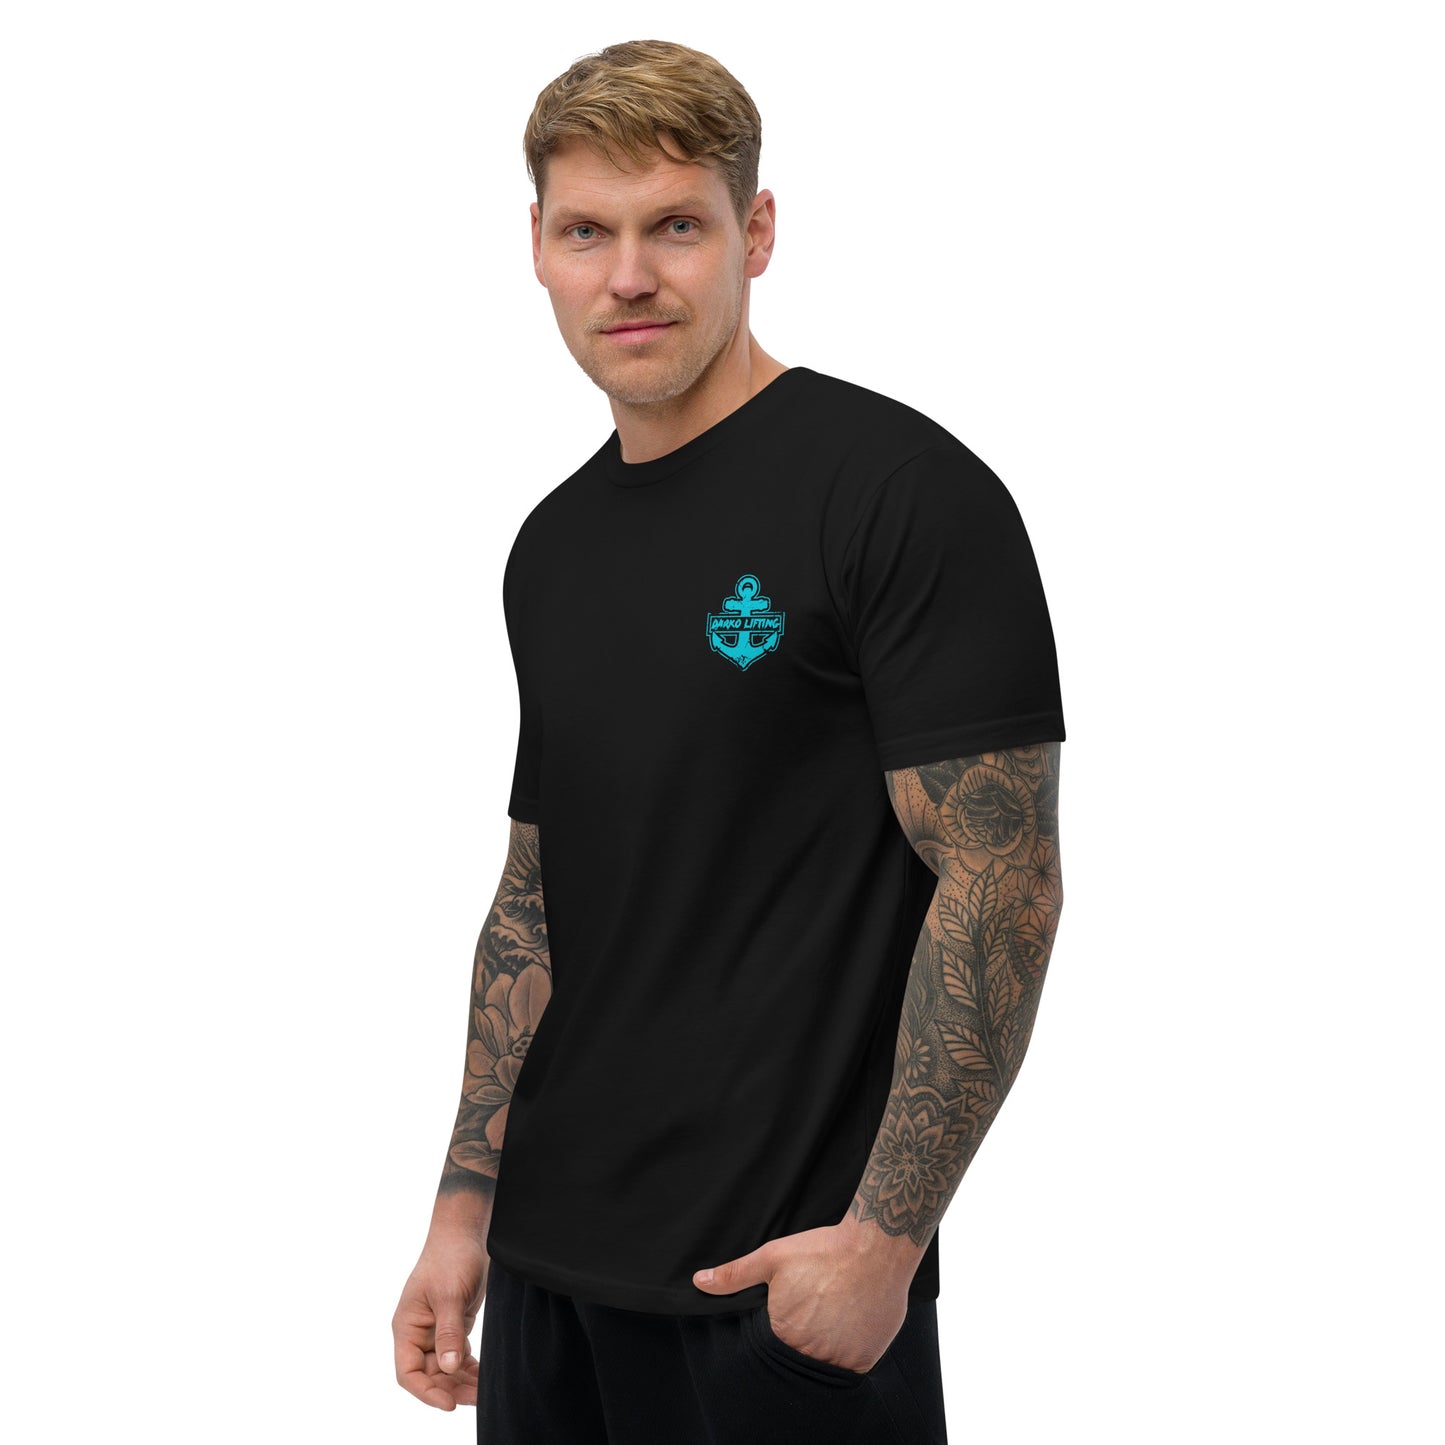 Darko Anchor Short Sleeve T-shirt